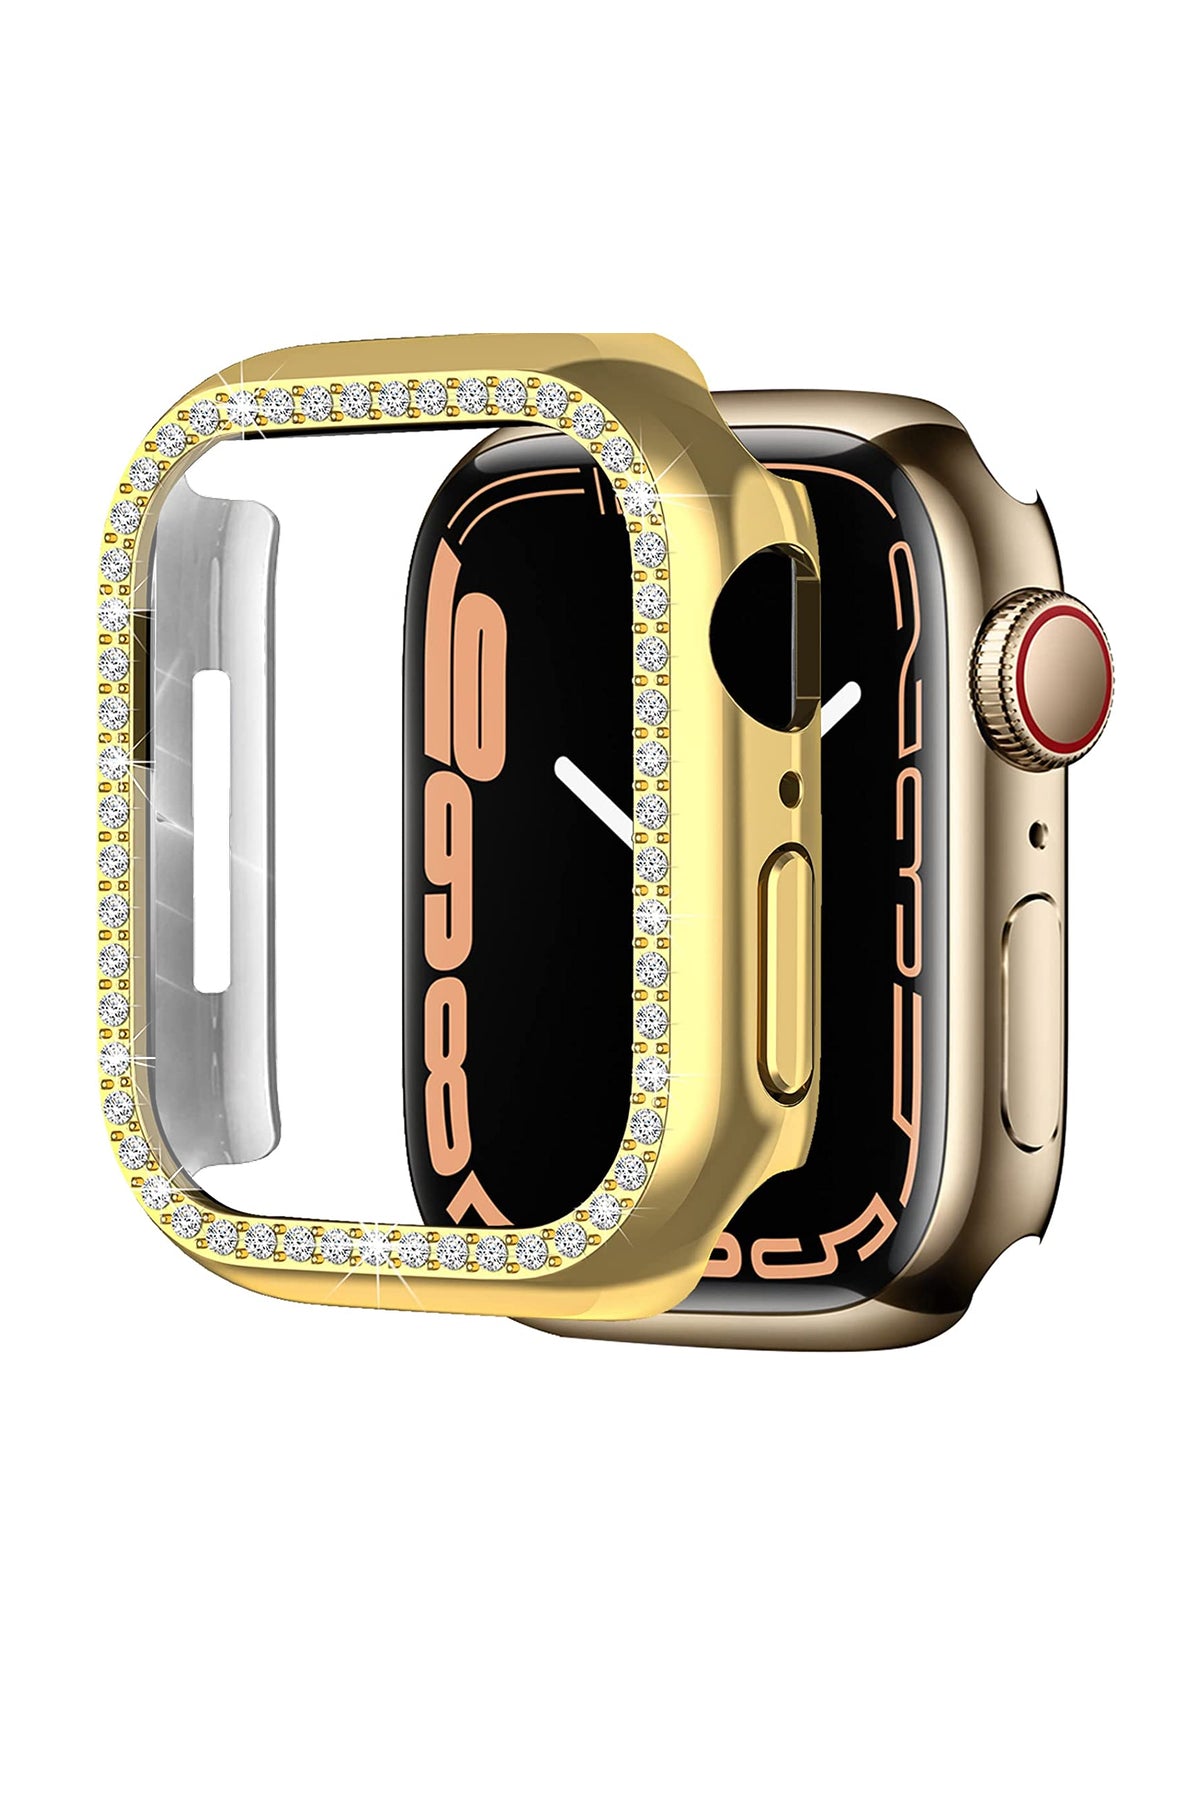 Apple Watch Compatible Bumper Stone Shiny Case Tuscany 